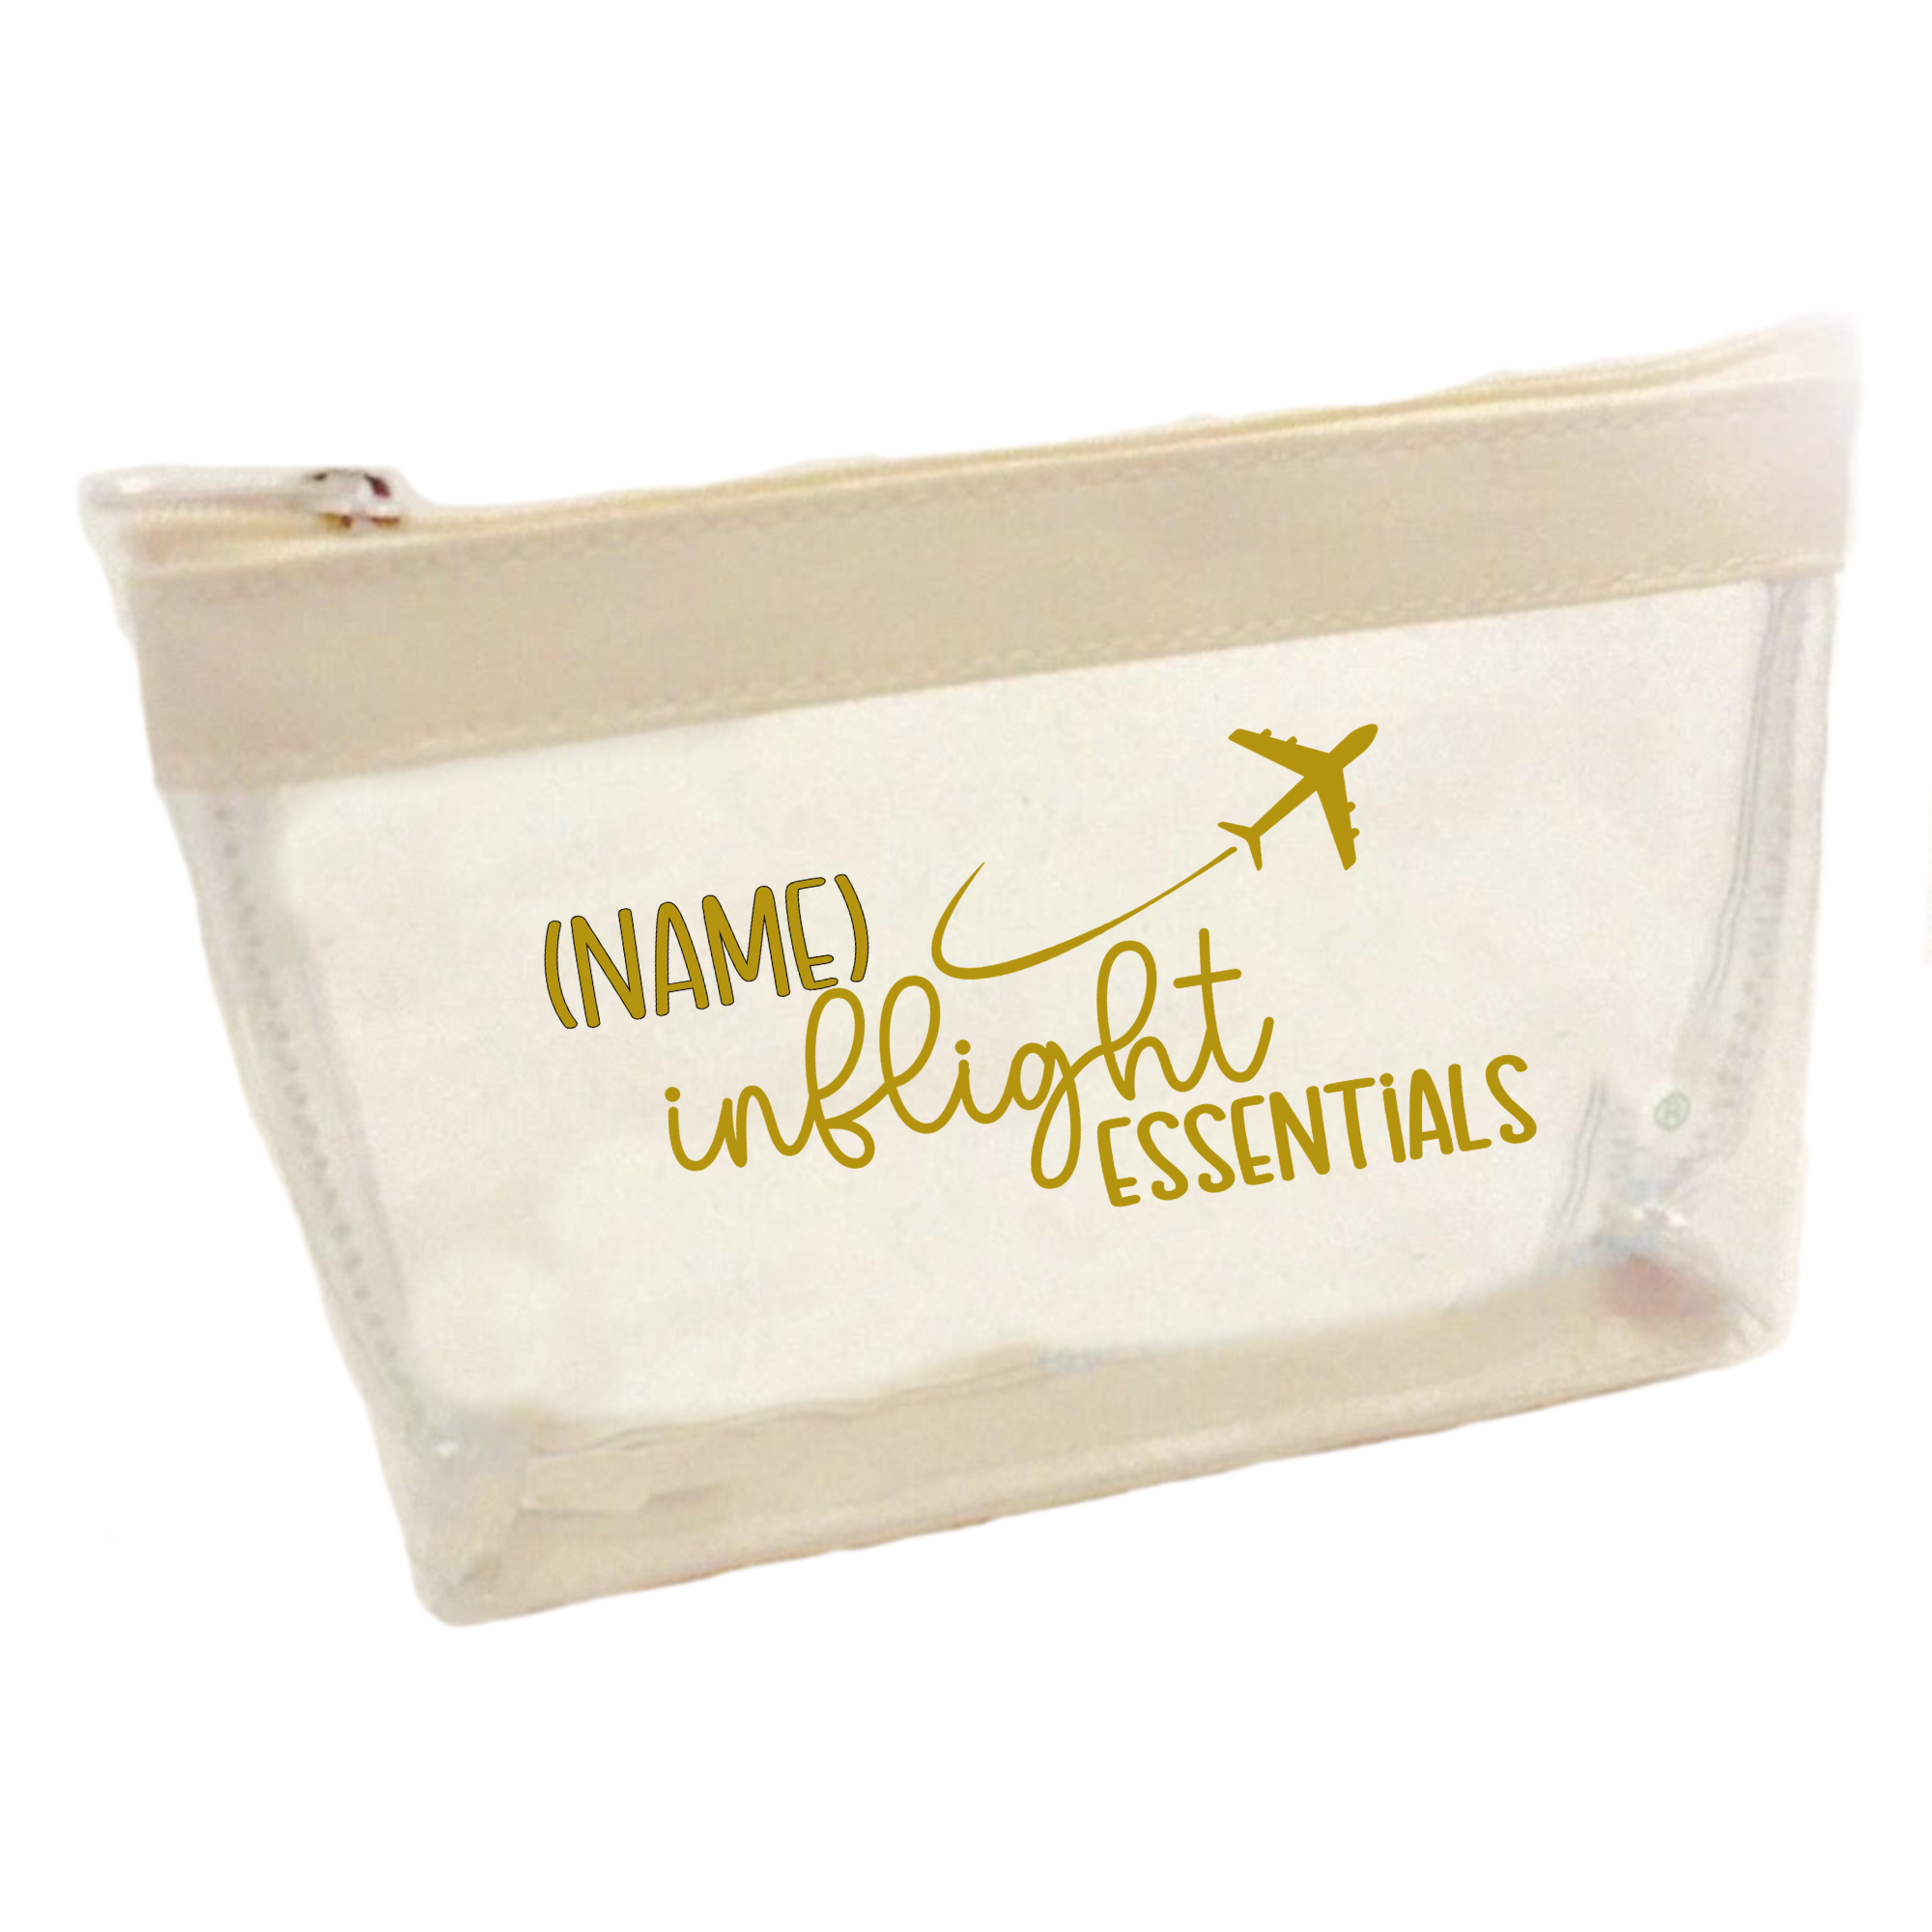 TSA clear vinyl pouch-Inflight Essentials/Cruise Essentials